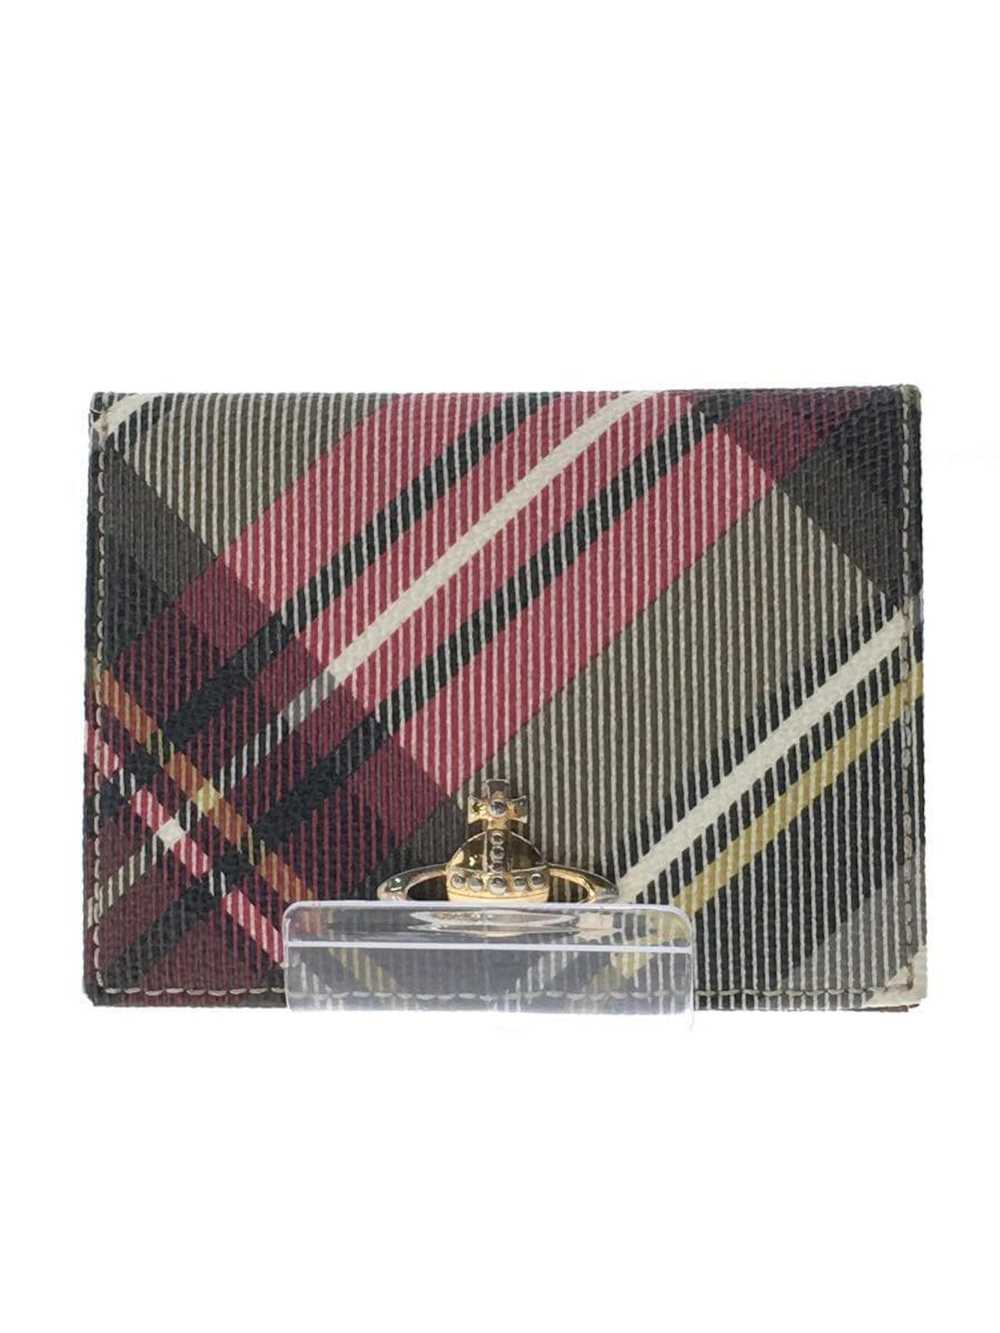 Vivienne Westwood 🐎 Checkered Orb Wallet - image 1